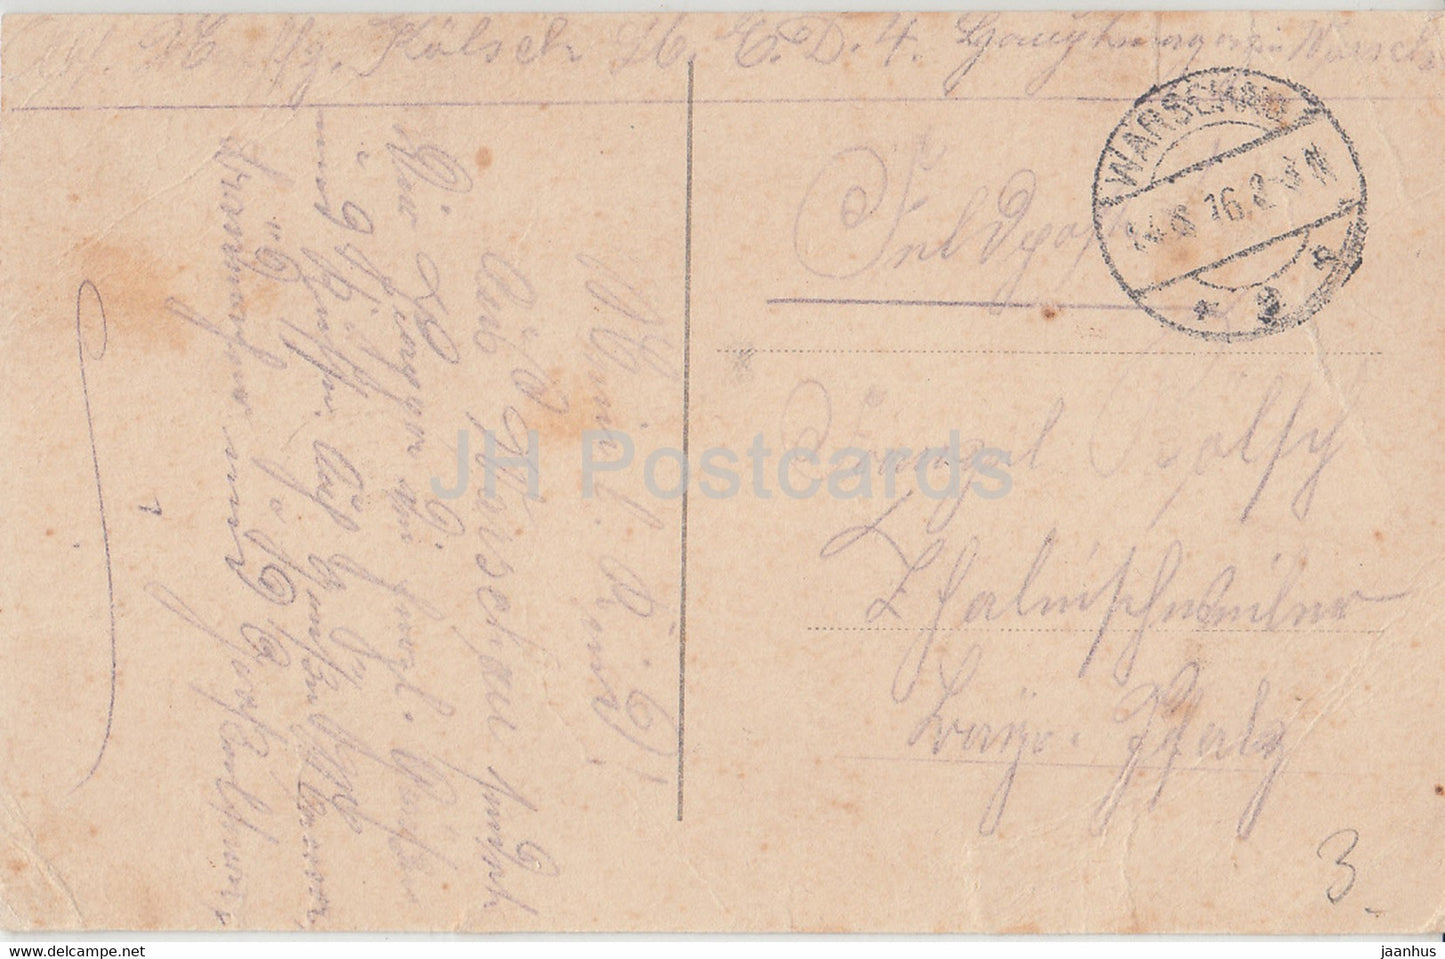 Warschau - Denkmal Konigs Sigizmund - Feldpost - carte postale ancienne - 1916 - Pologne - utilisé